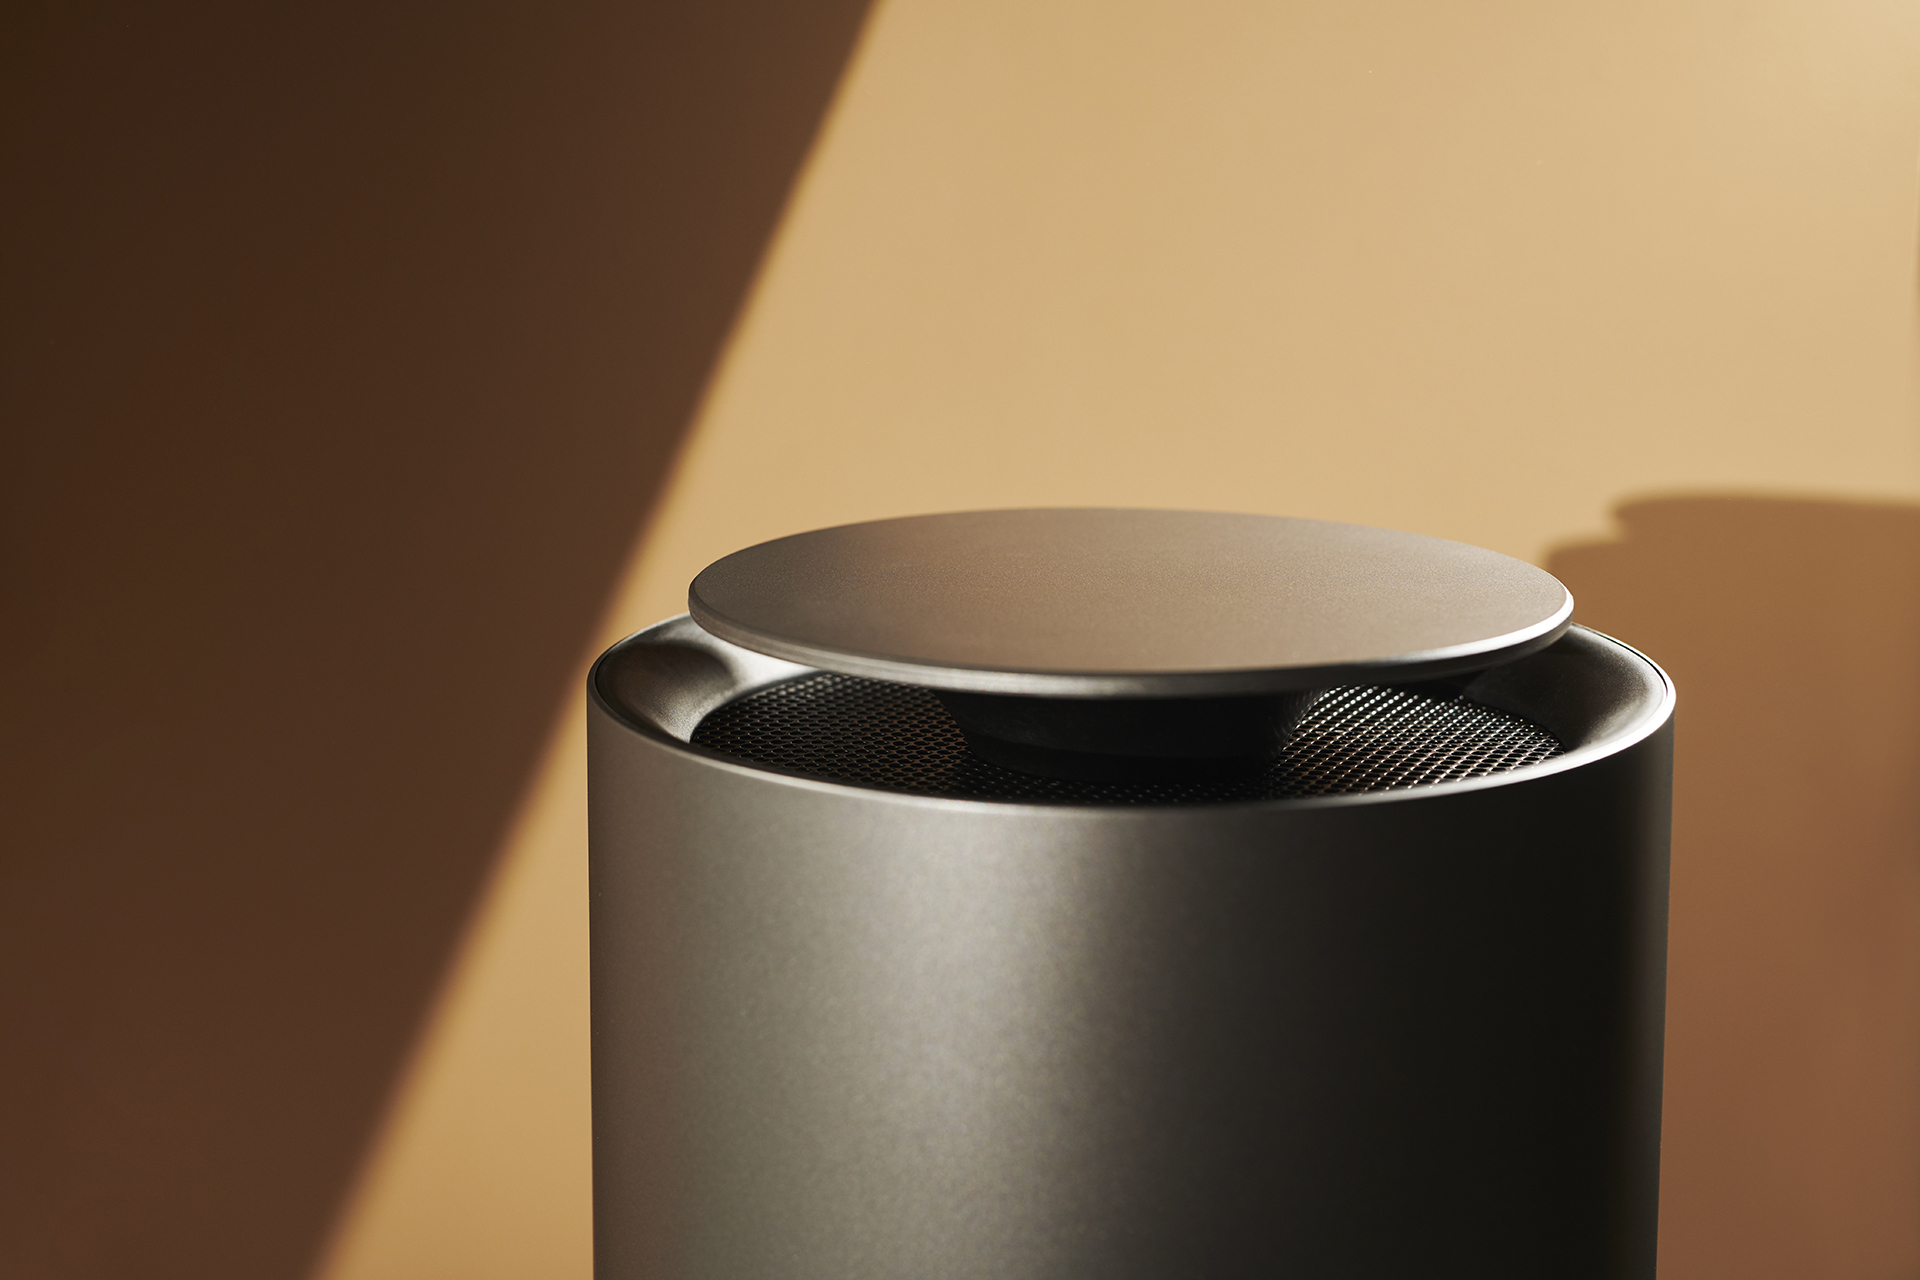 Duux Threesixty Smart Ceramic Heater